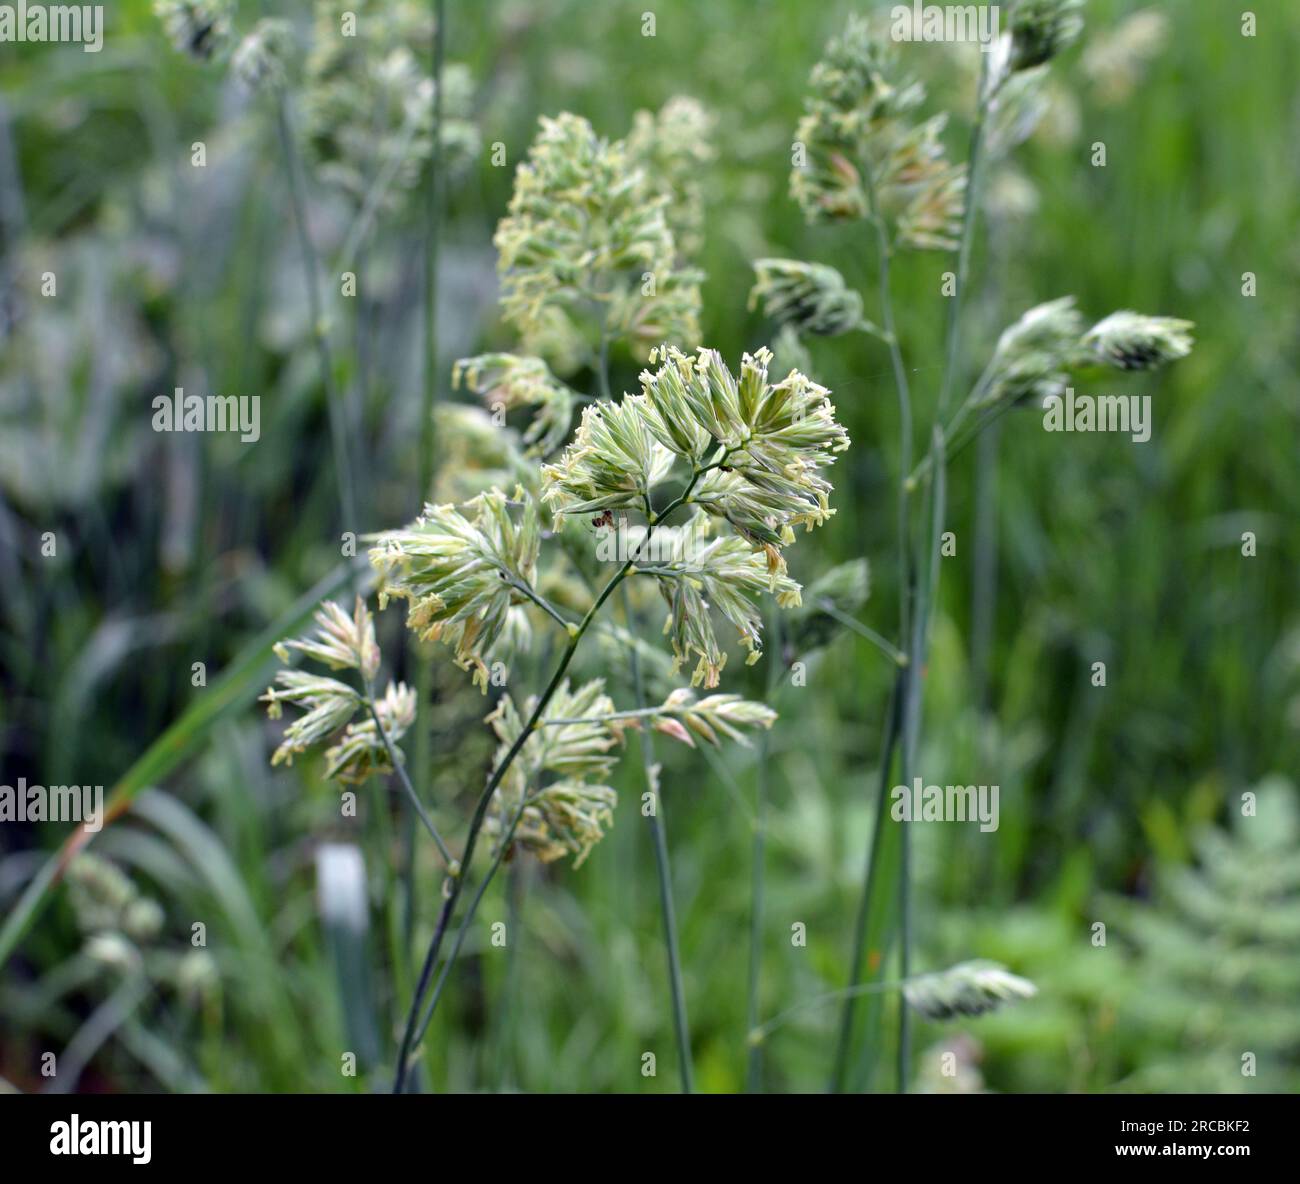 Valuable forage grass Dactylis glomerata grows in nature Stock Photo